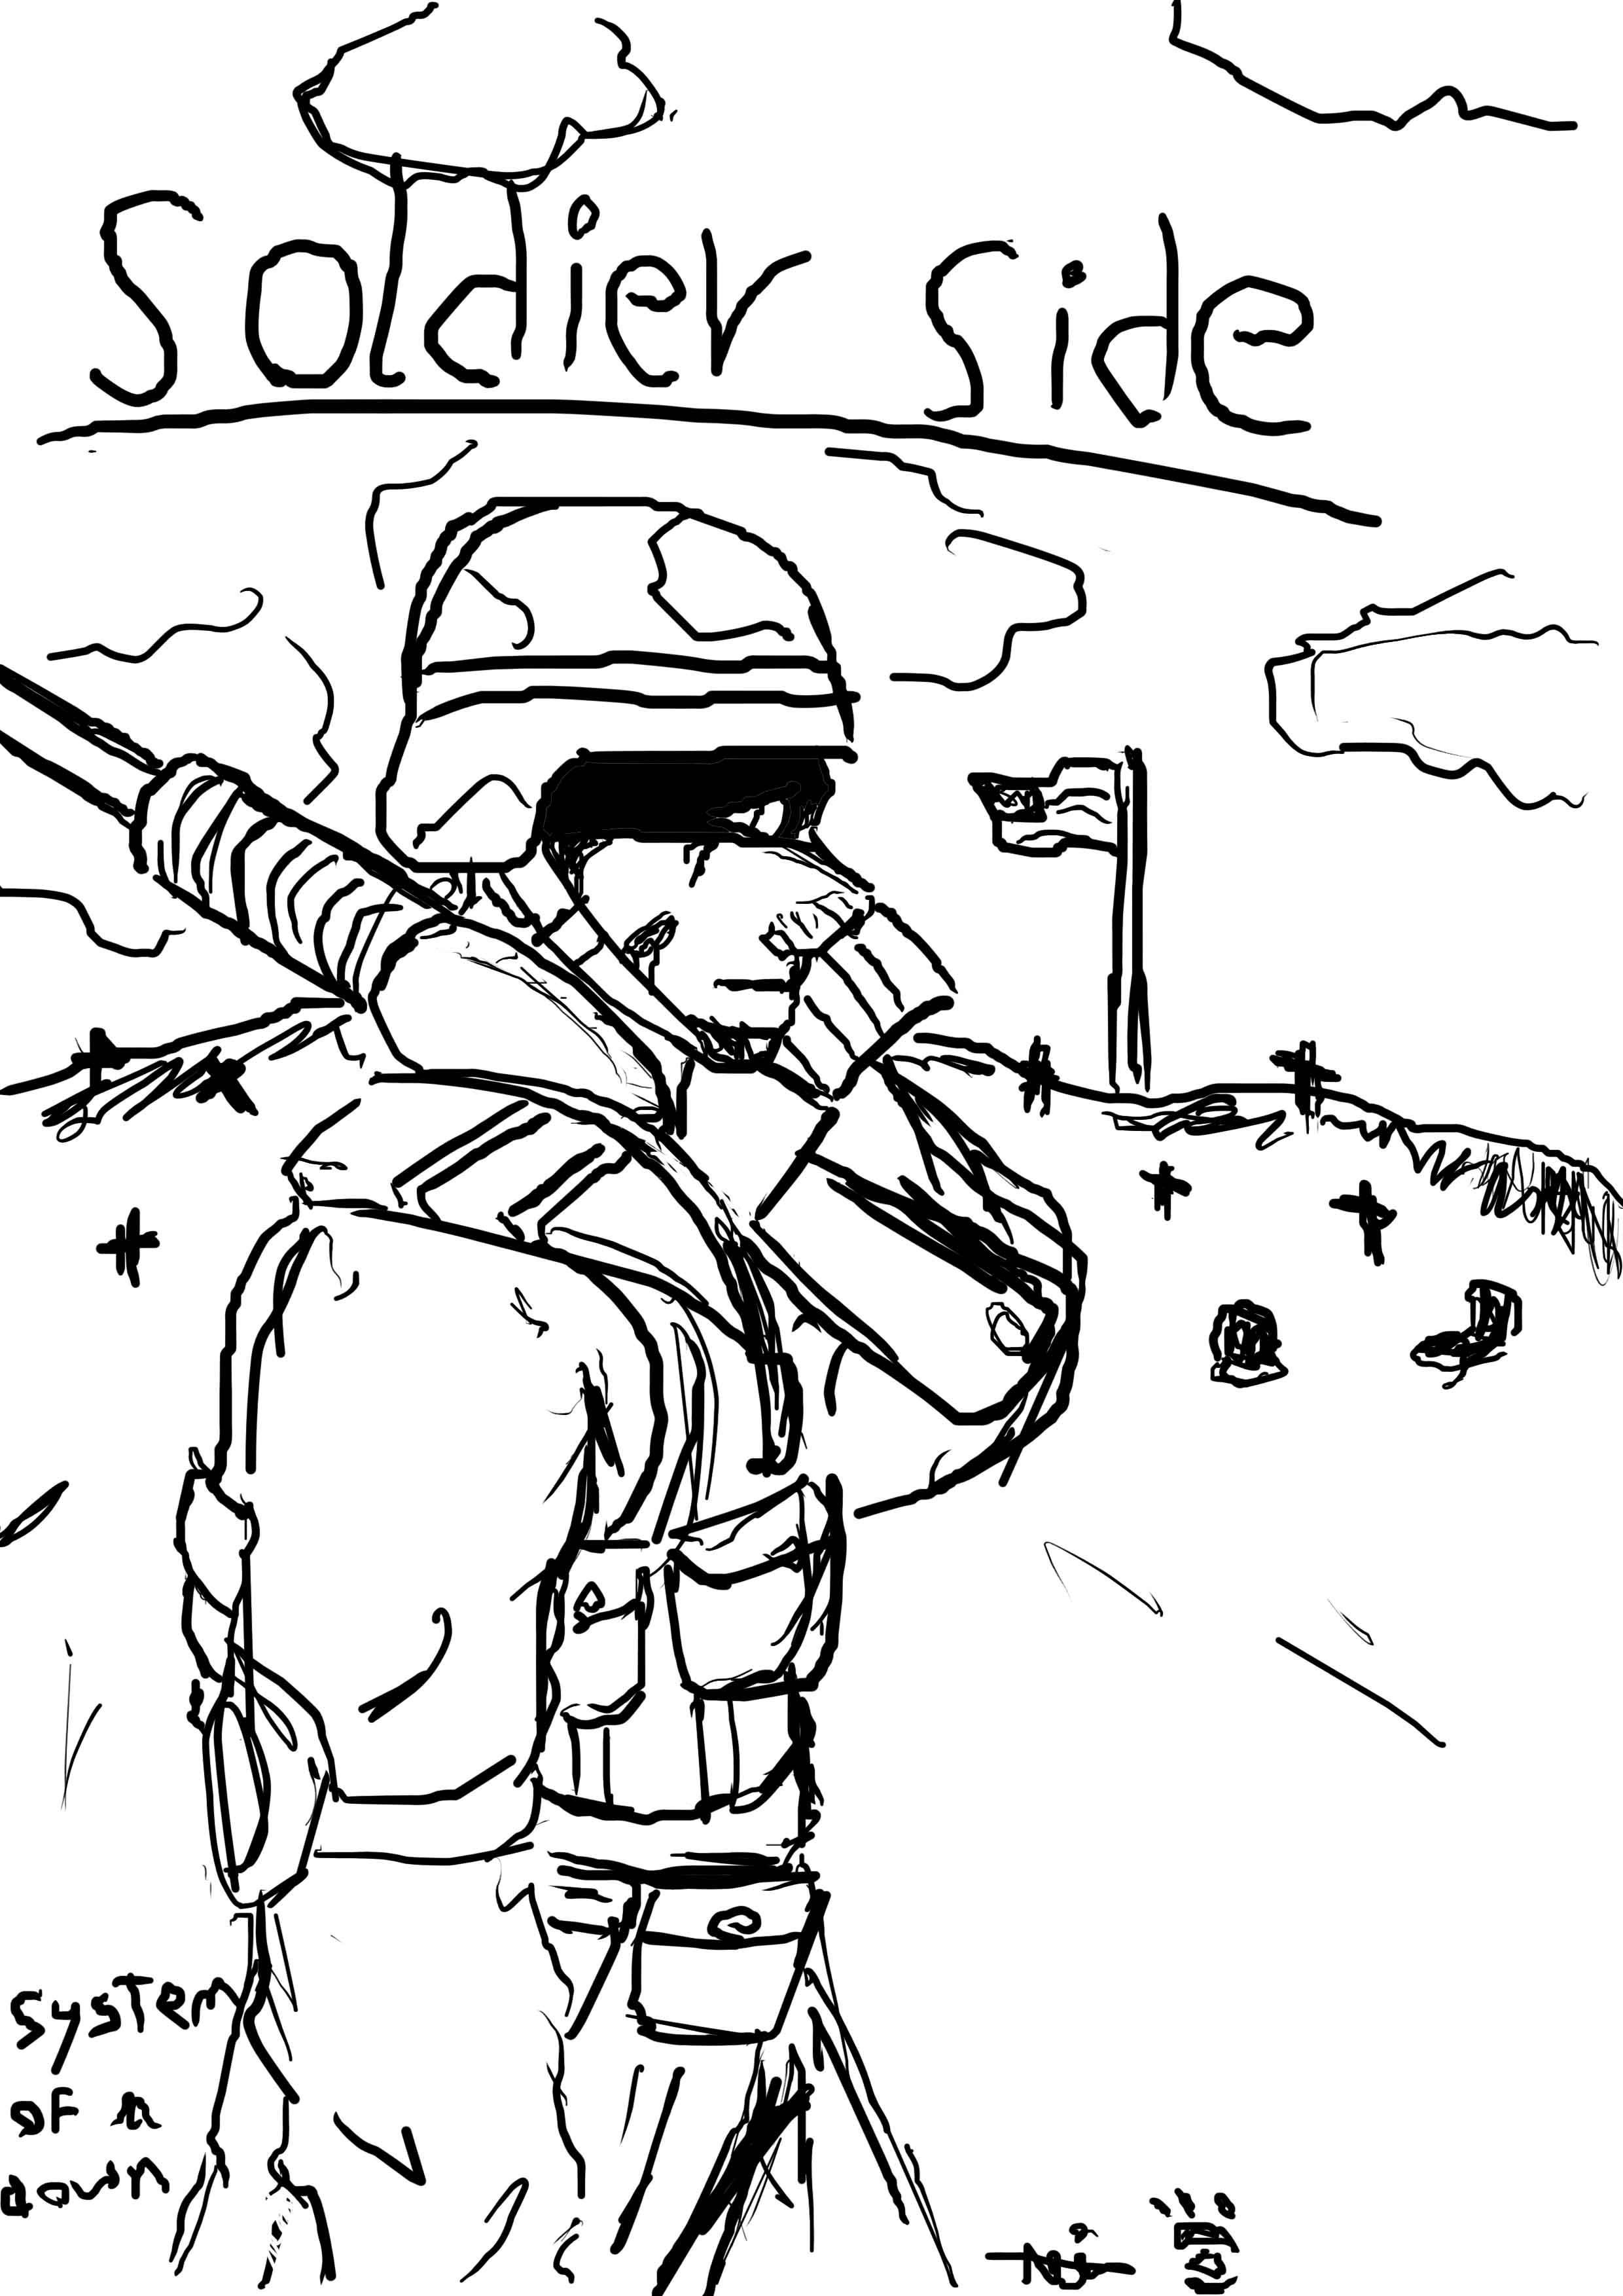 soldier side by niv